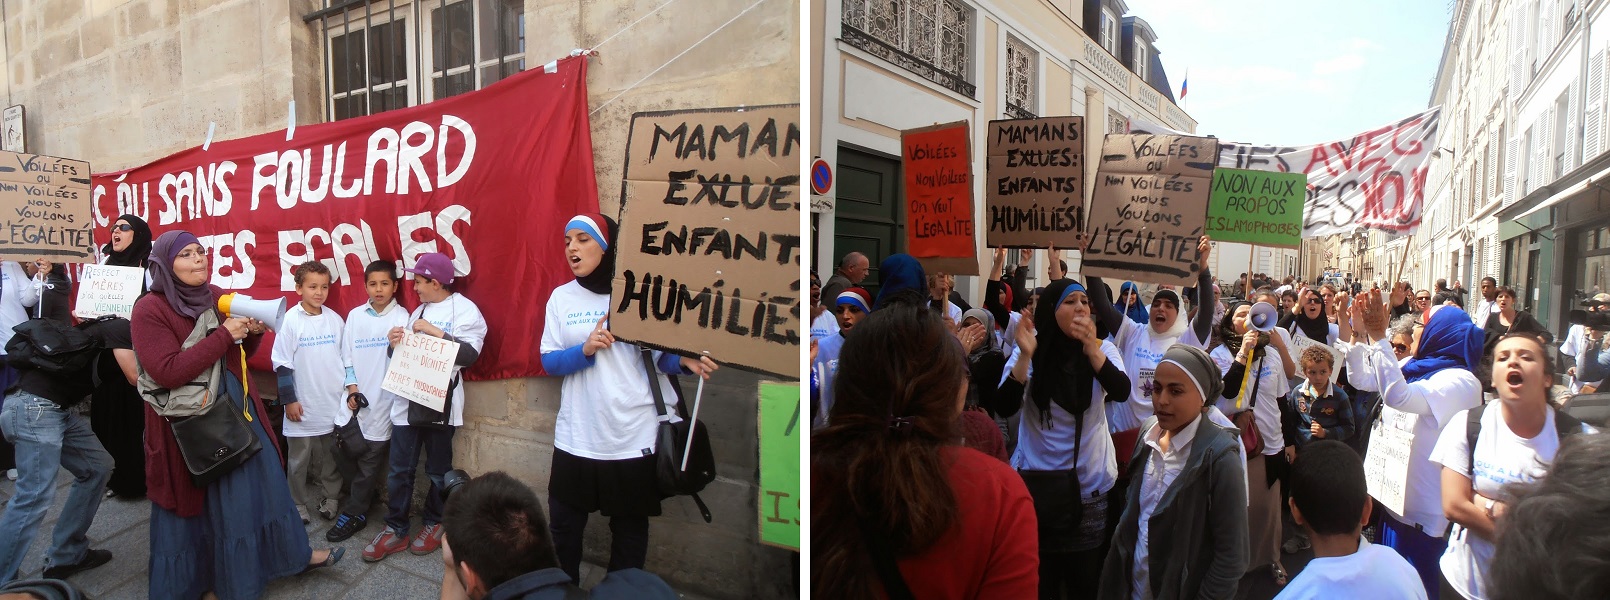 Paris protest against Chatel circular June 2014